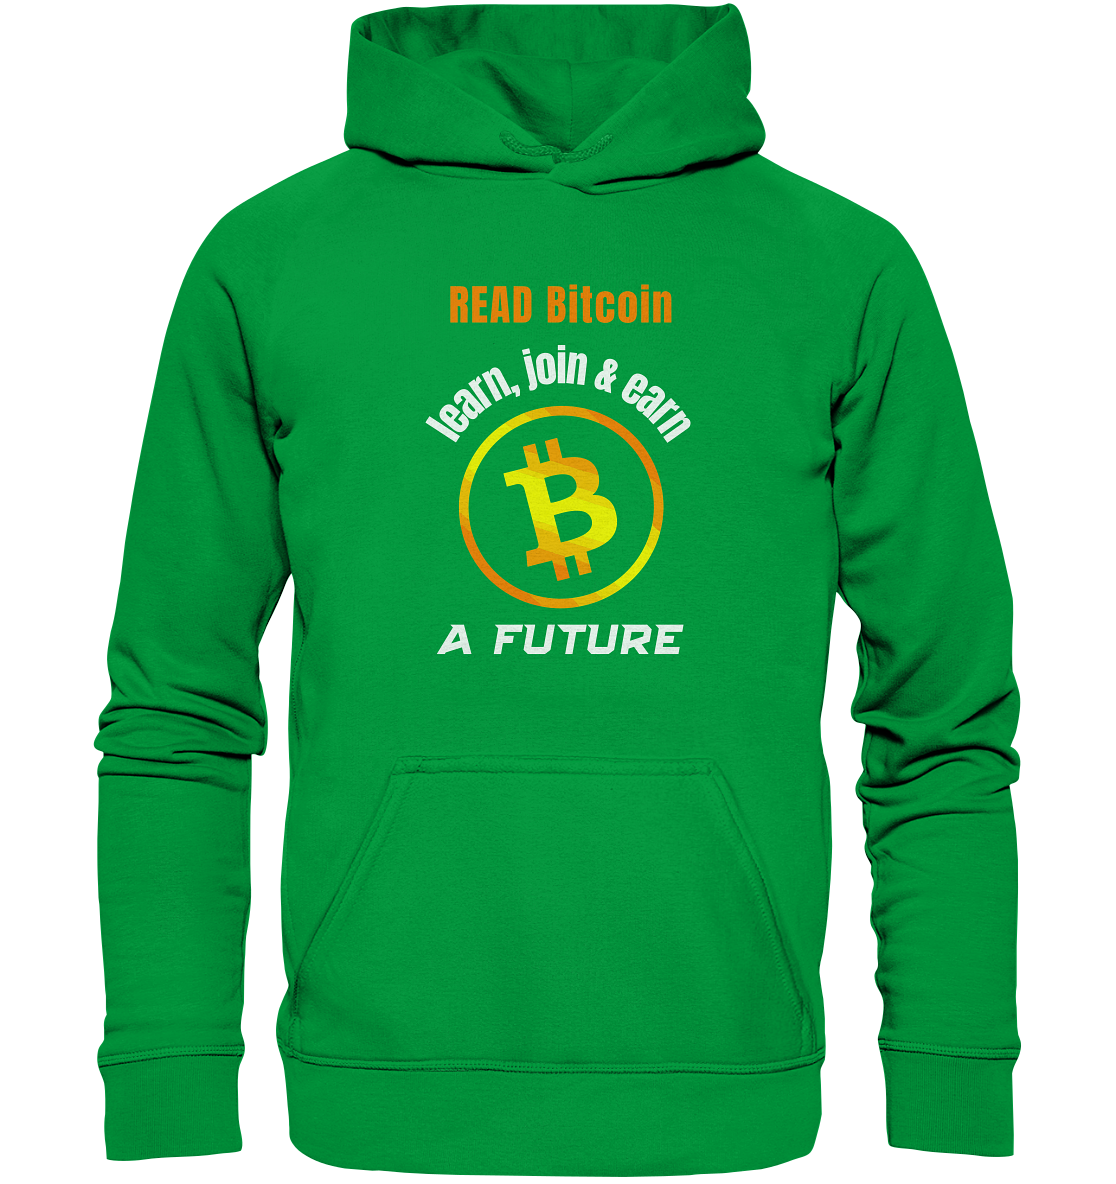 READ BITCOIN, learn & earn A FUTURE - Basic Unisex Hoodie